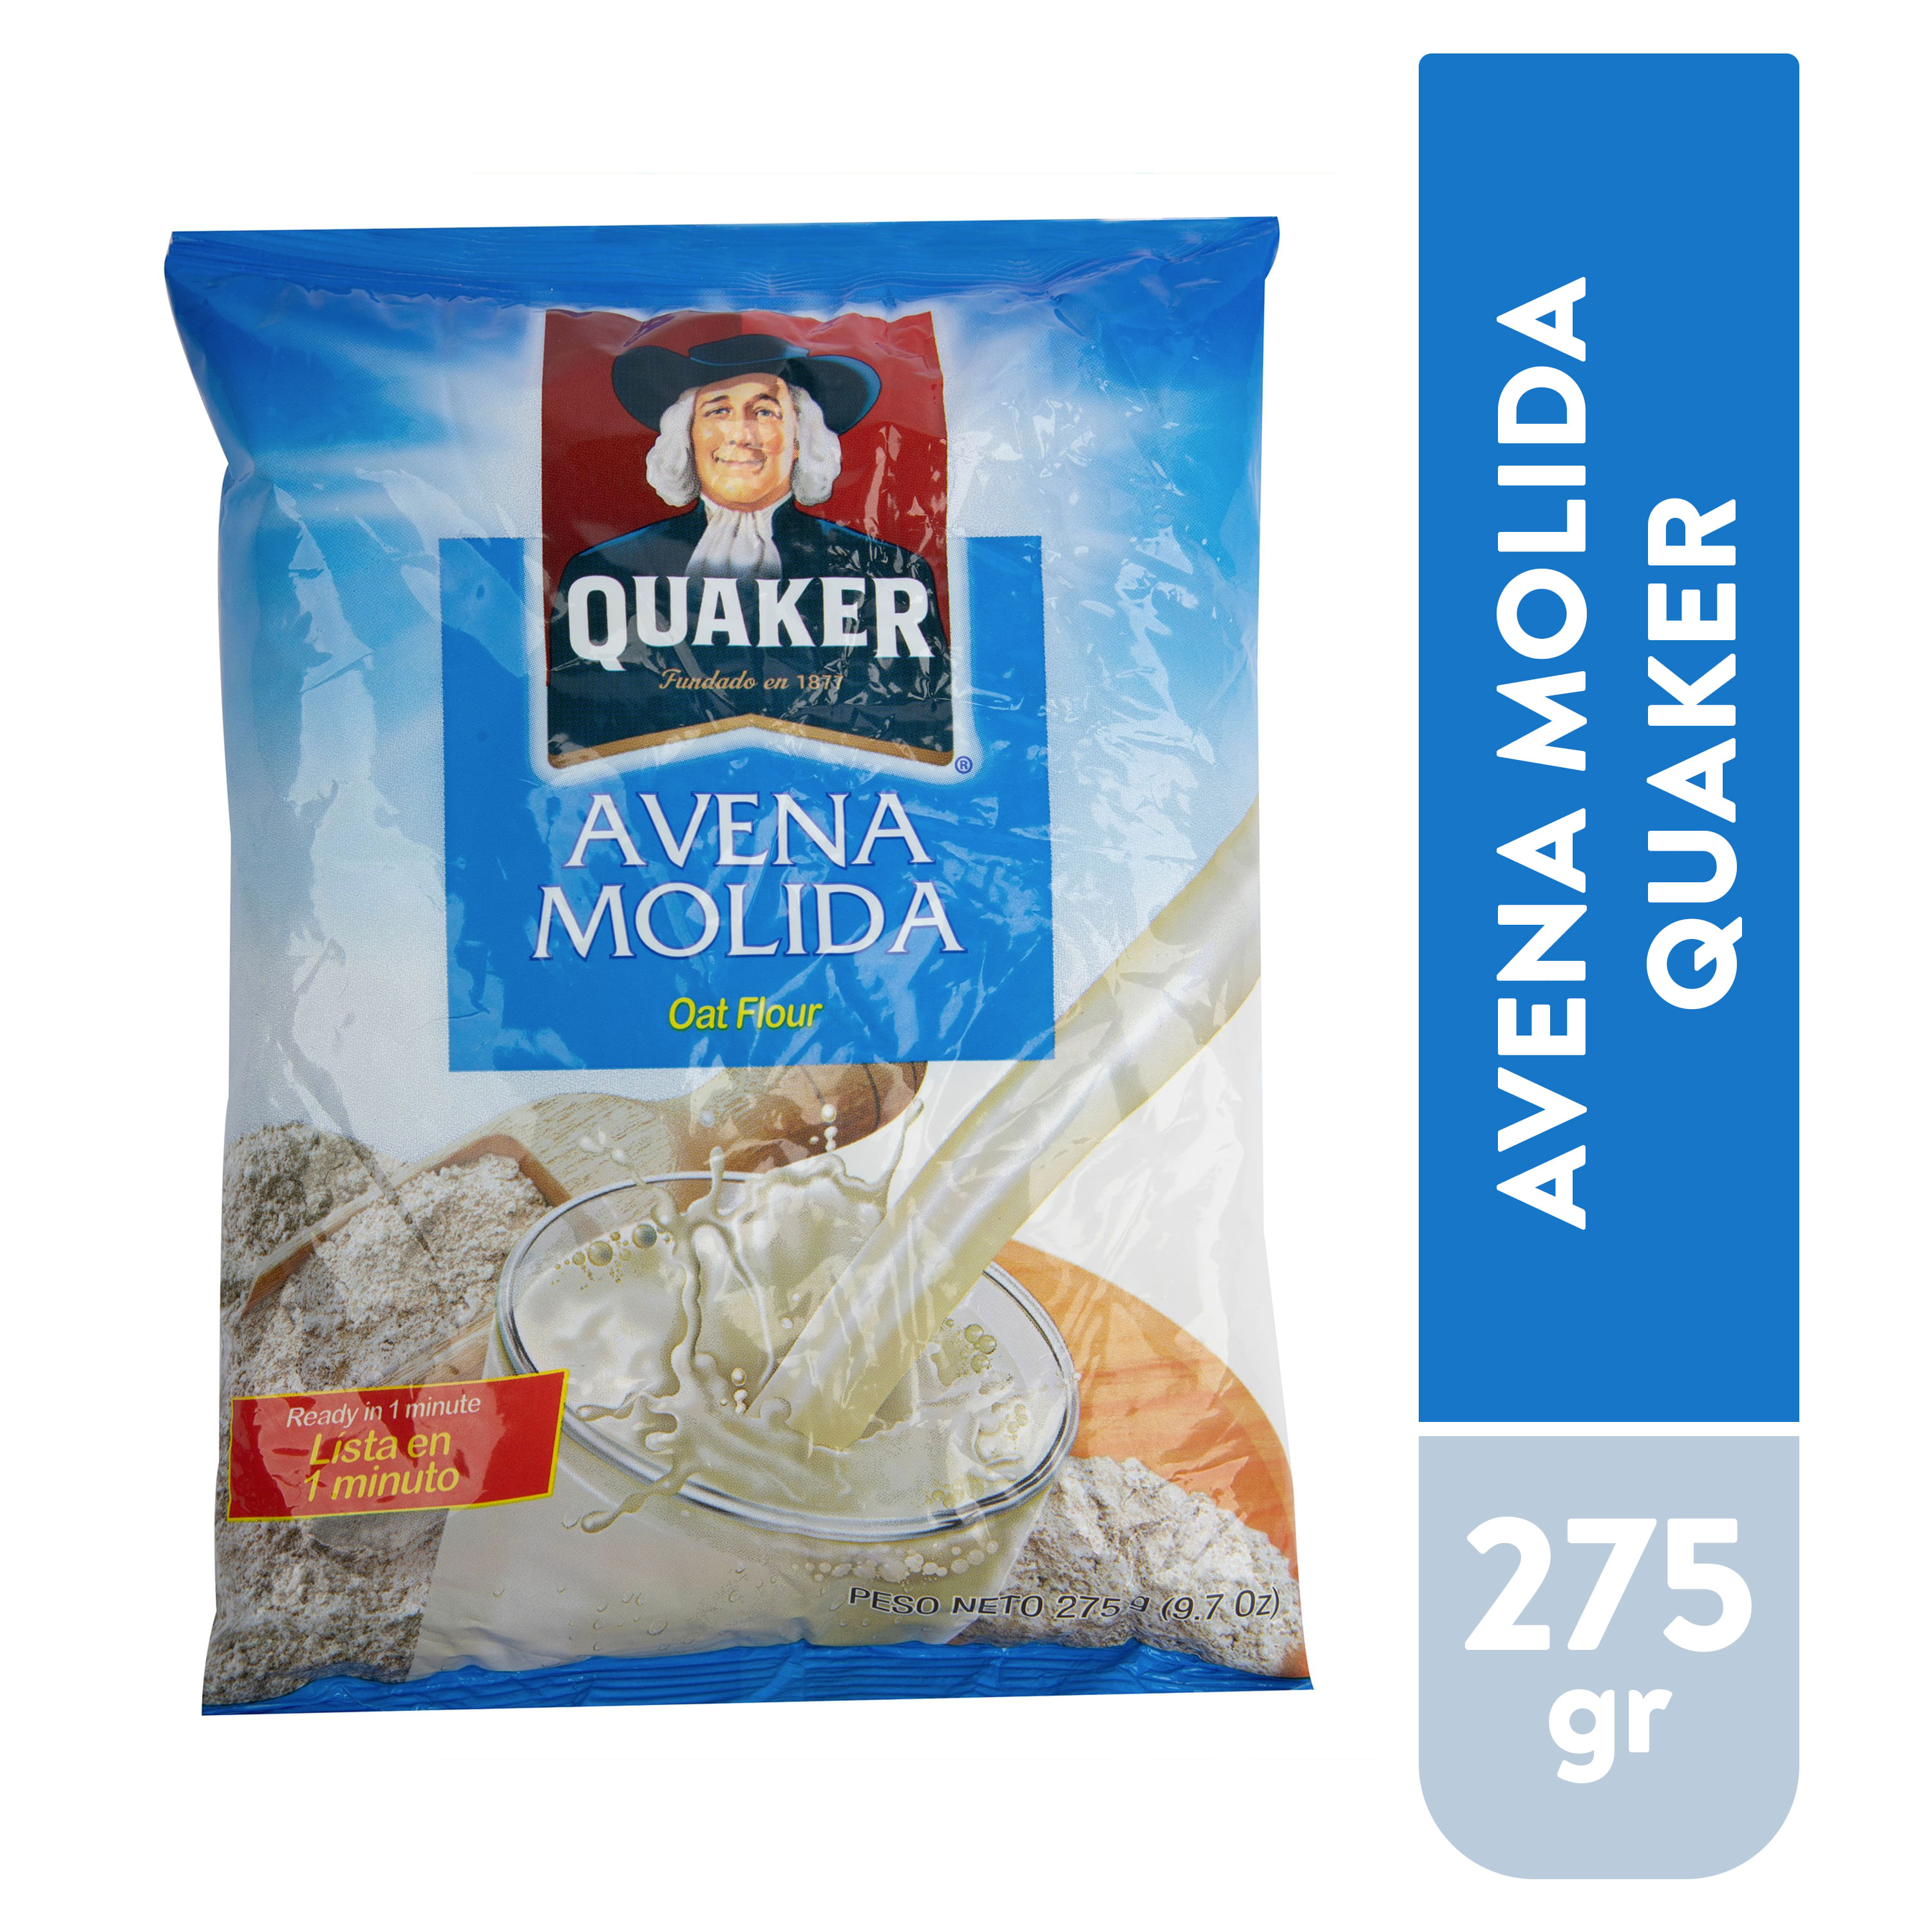 Avena-Quaker-Molida-275gr-1-3872